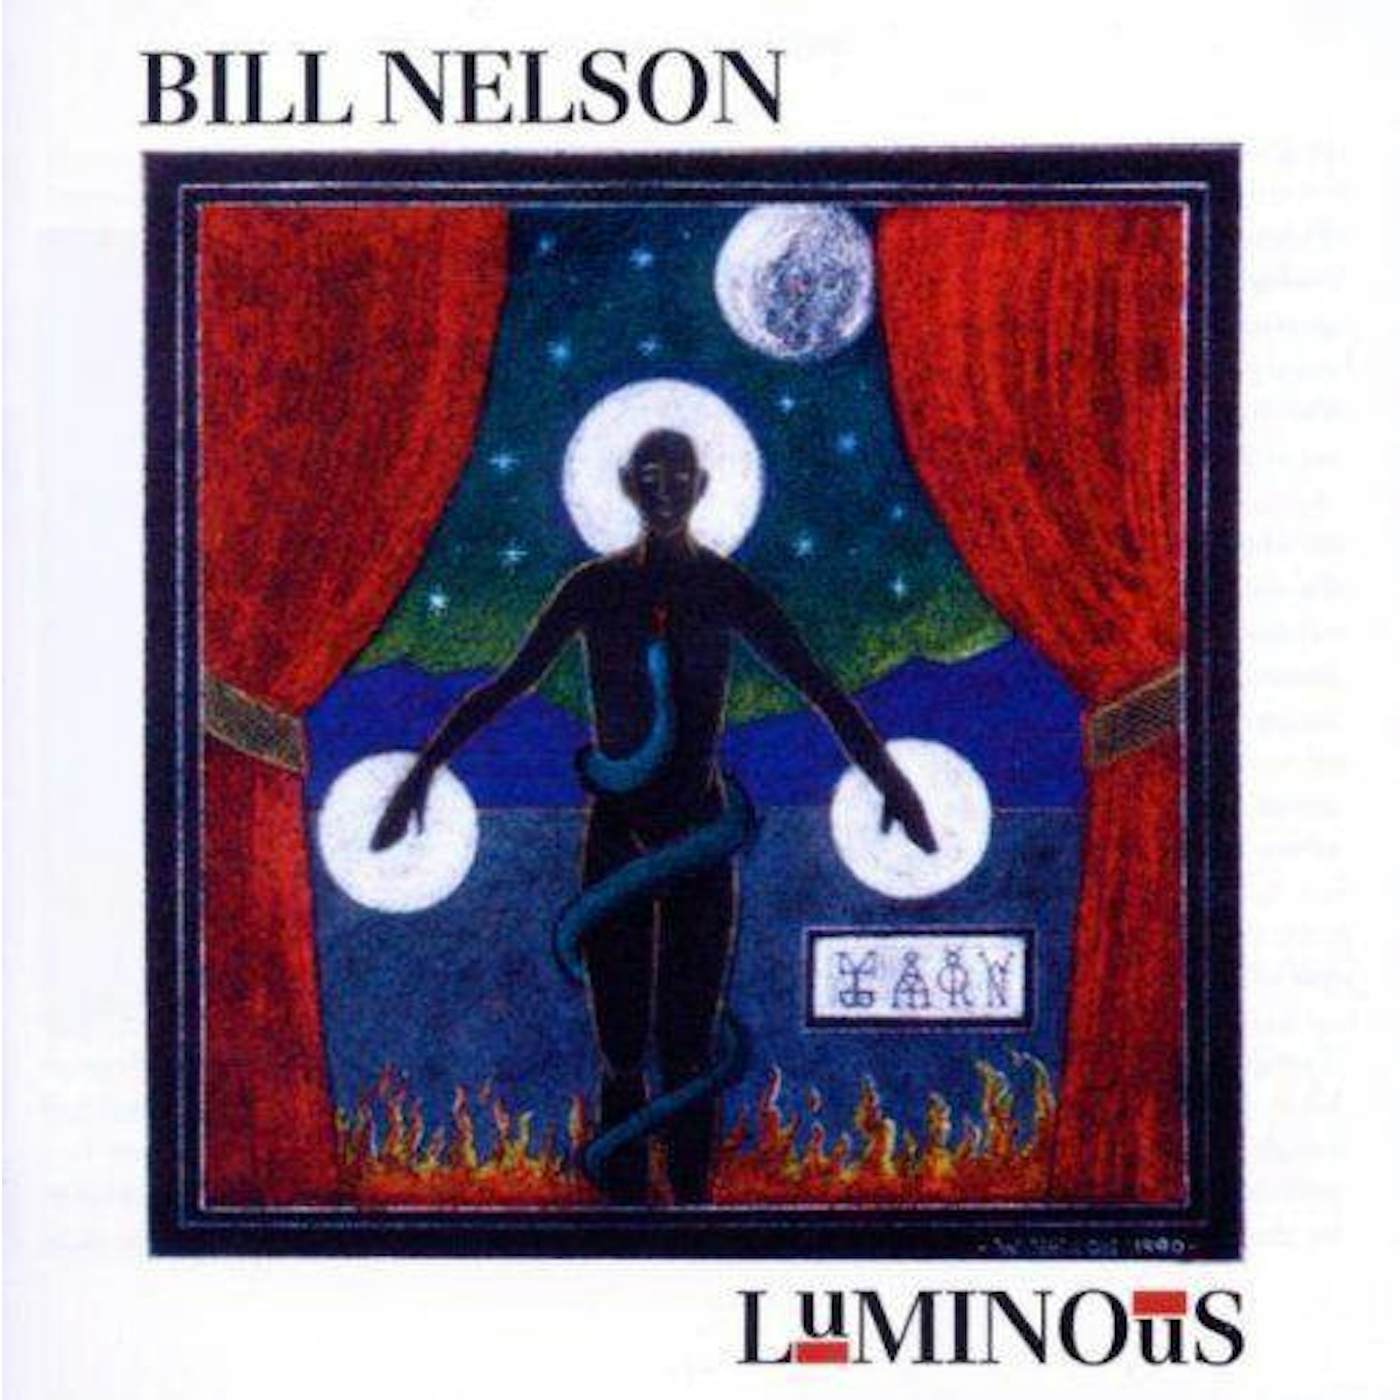 Bill Nelson LUMINOUS CD